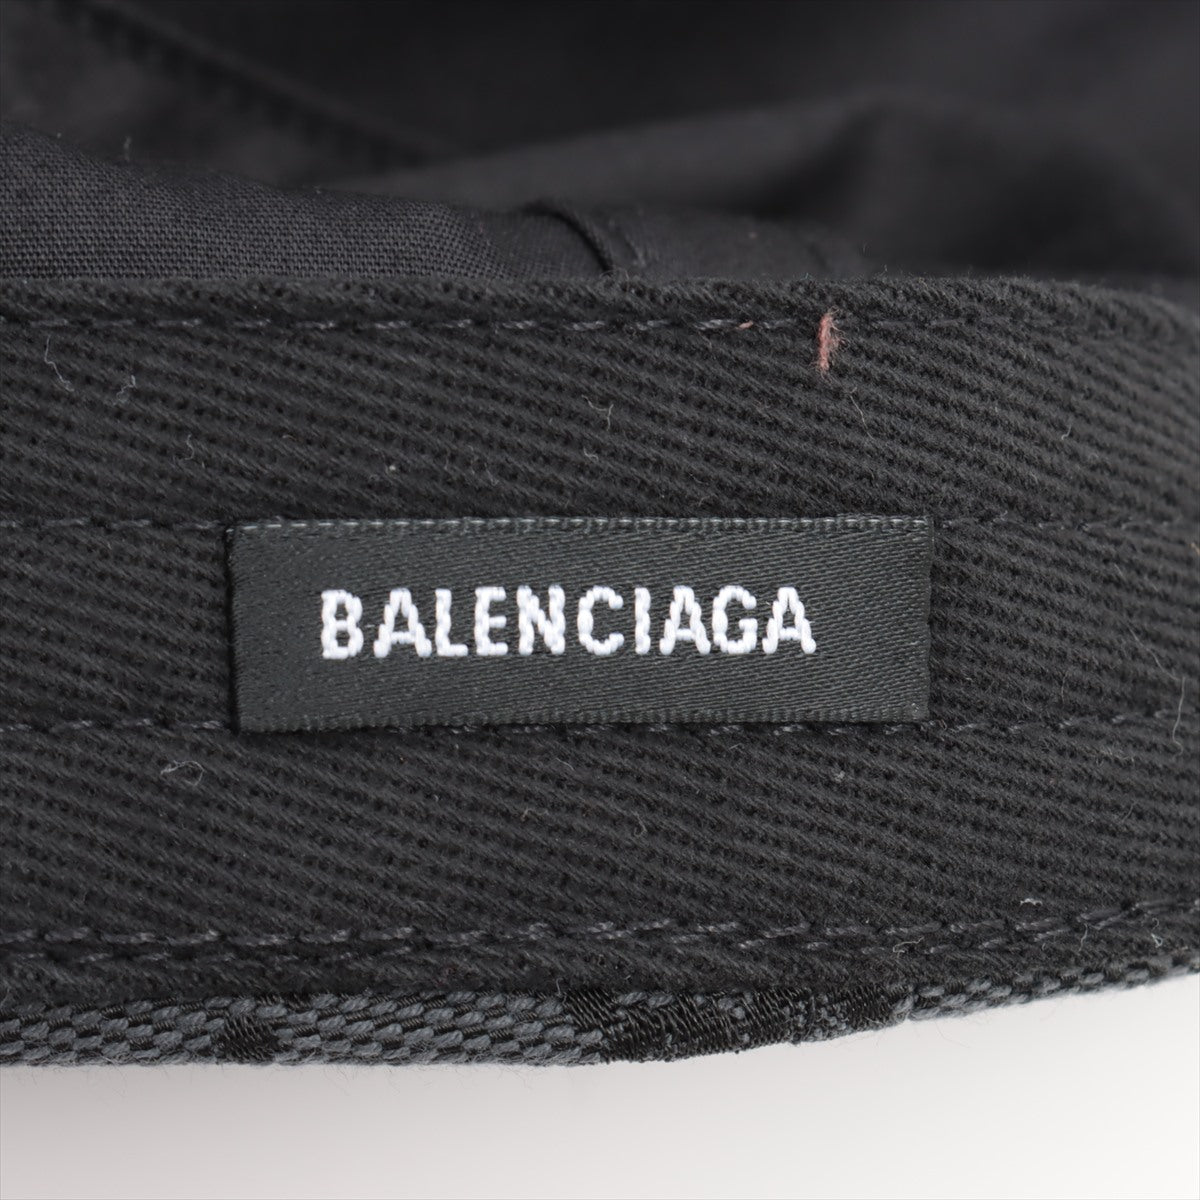 Gucci x Balenciaga 680717 4B3B7 Cap S Cotton & Polyester Black